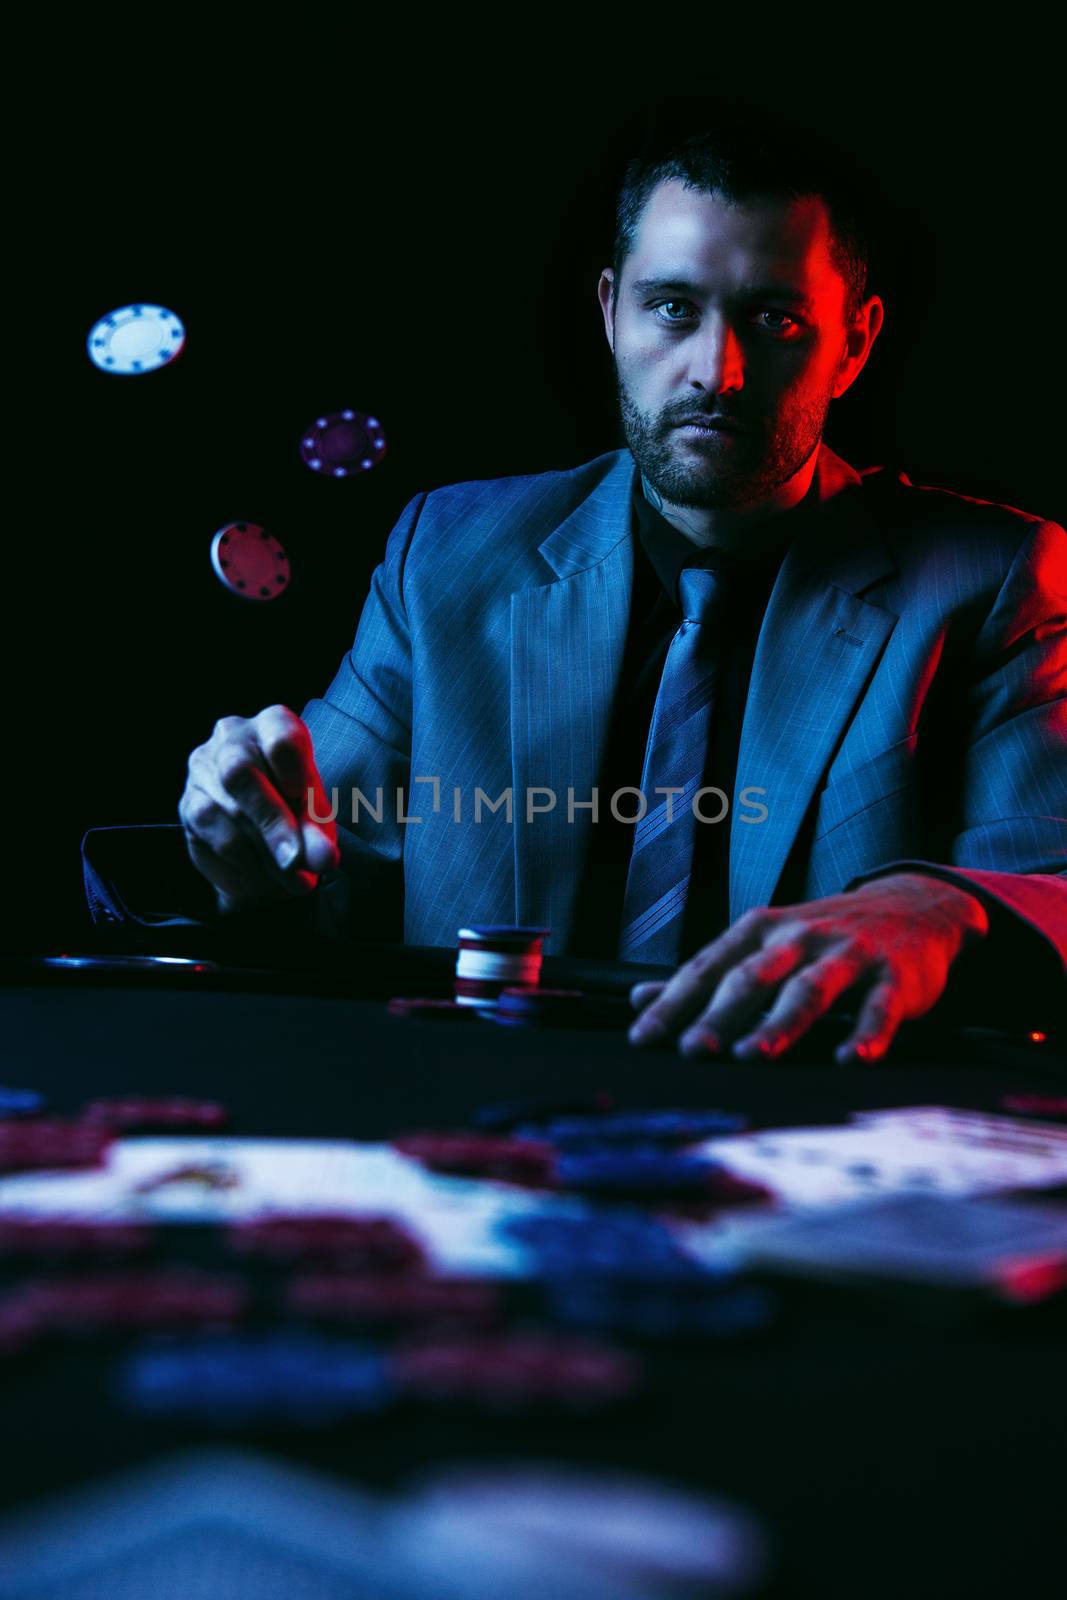 Emotional high stakes poker player by artistrobd